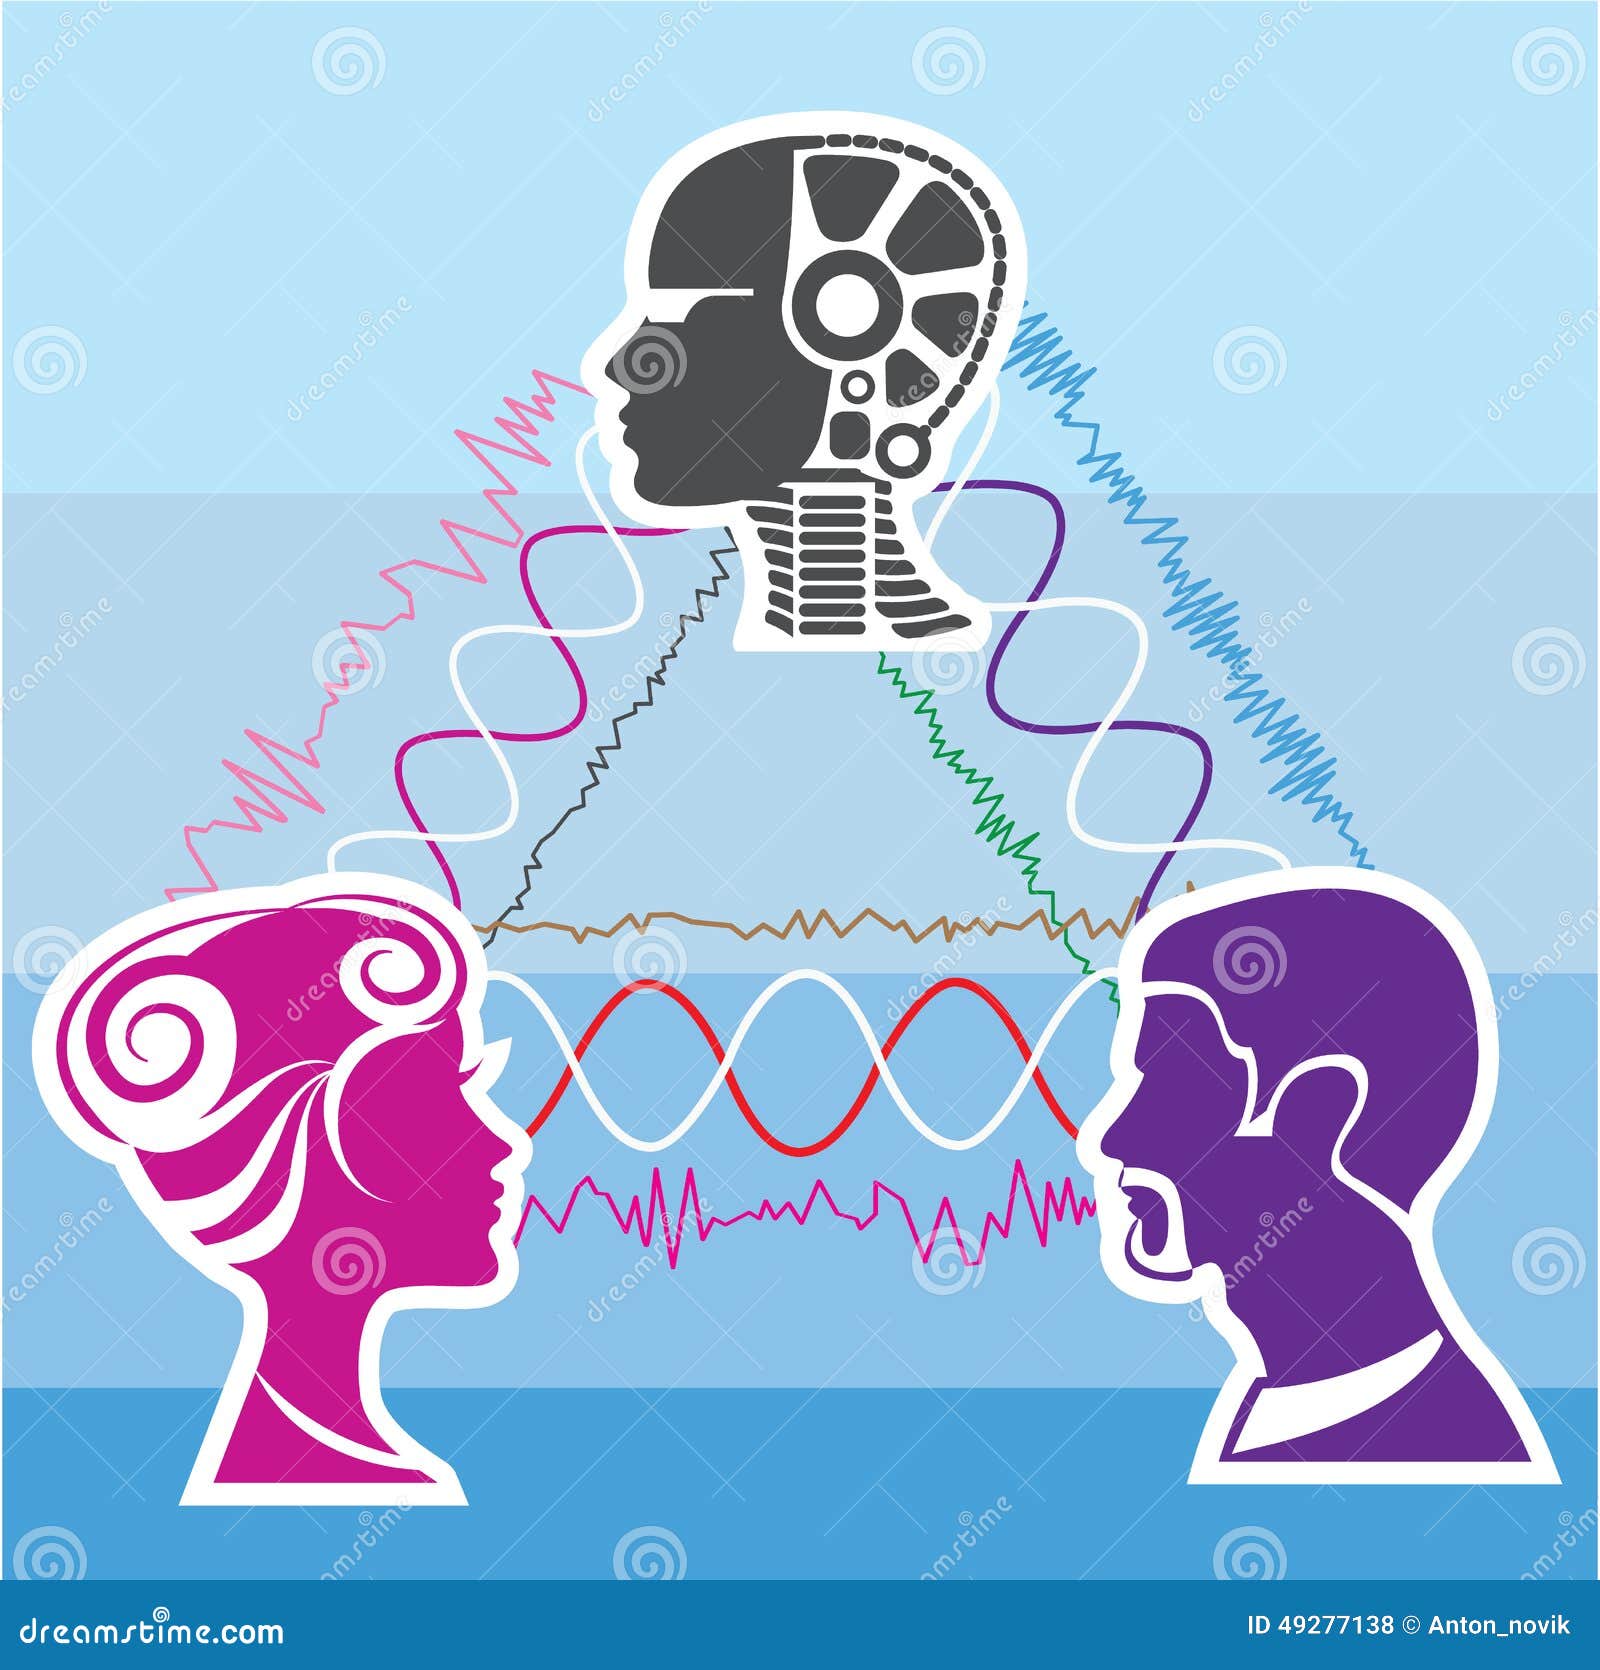 brainwave connection